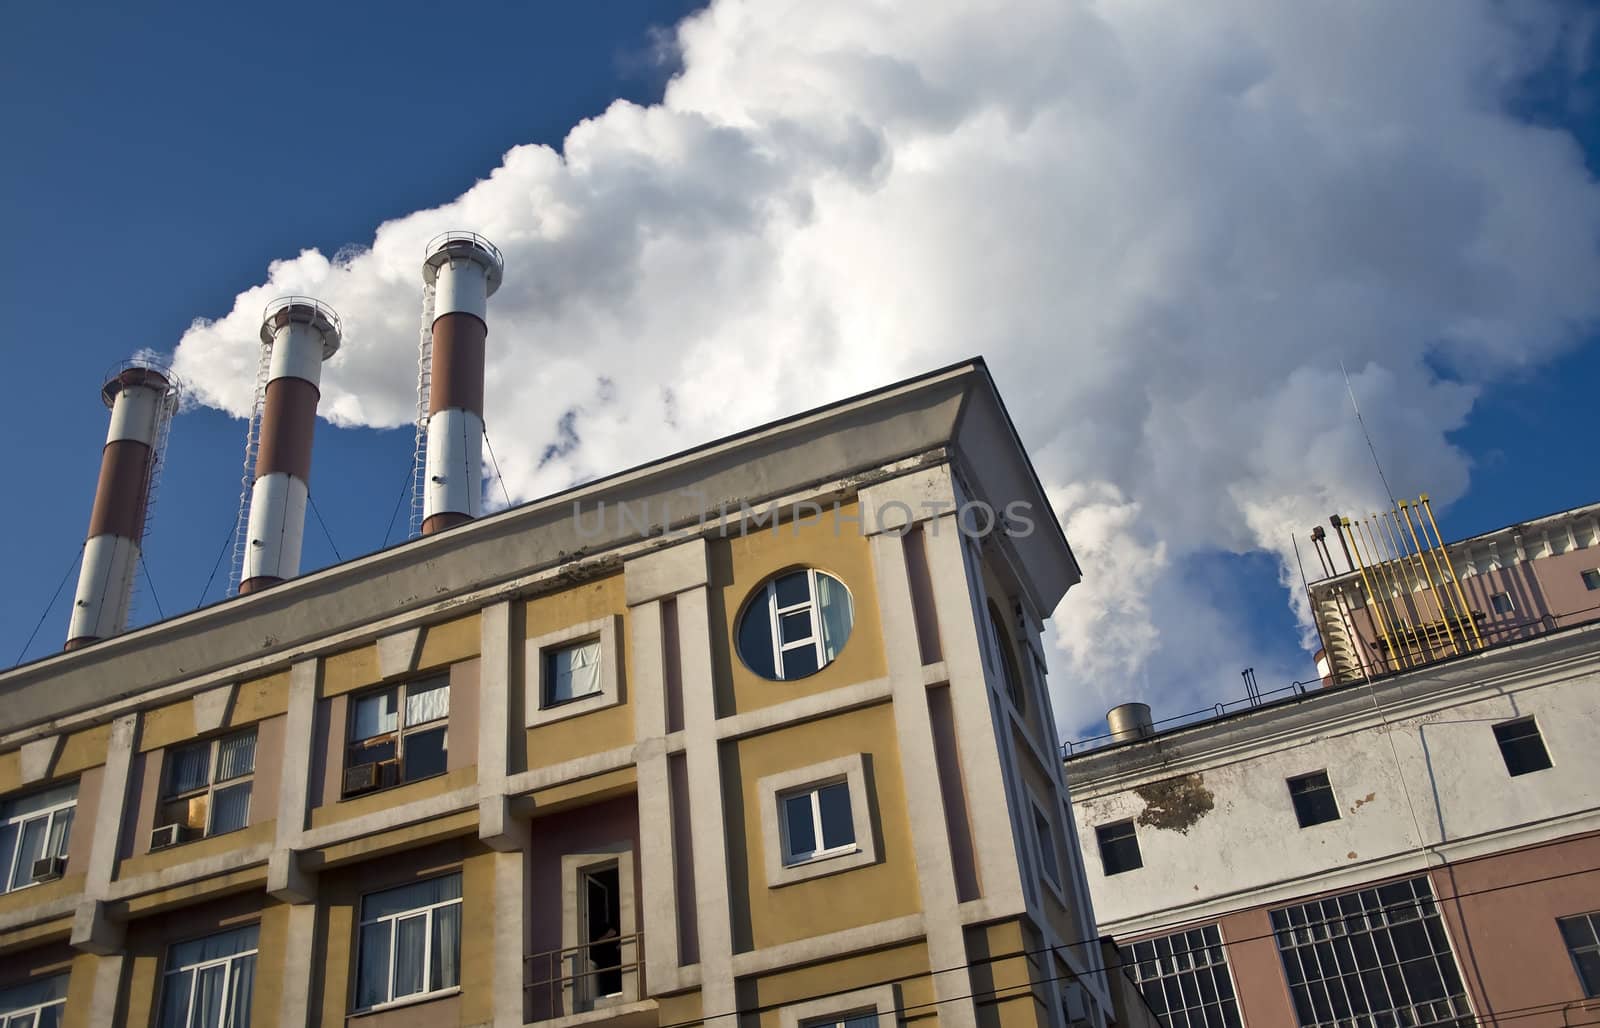 Pipe plant emit harmful substances. Against the blue sky. Industrial landscape.